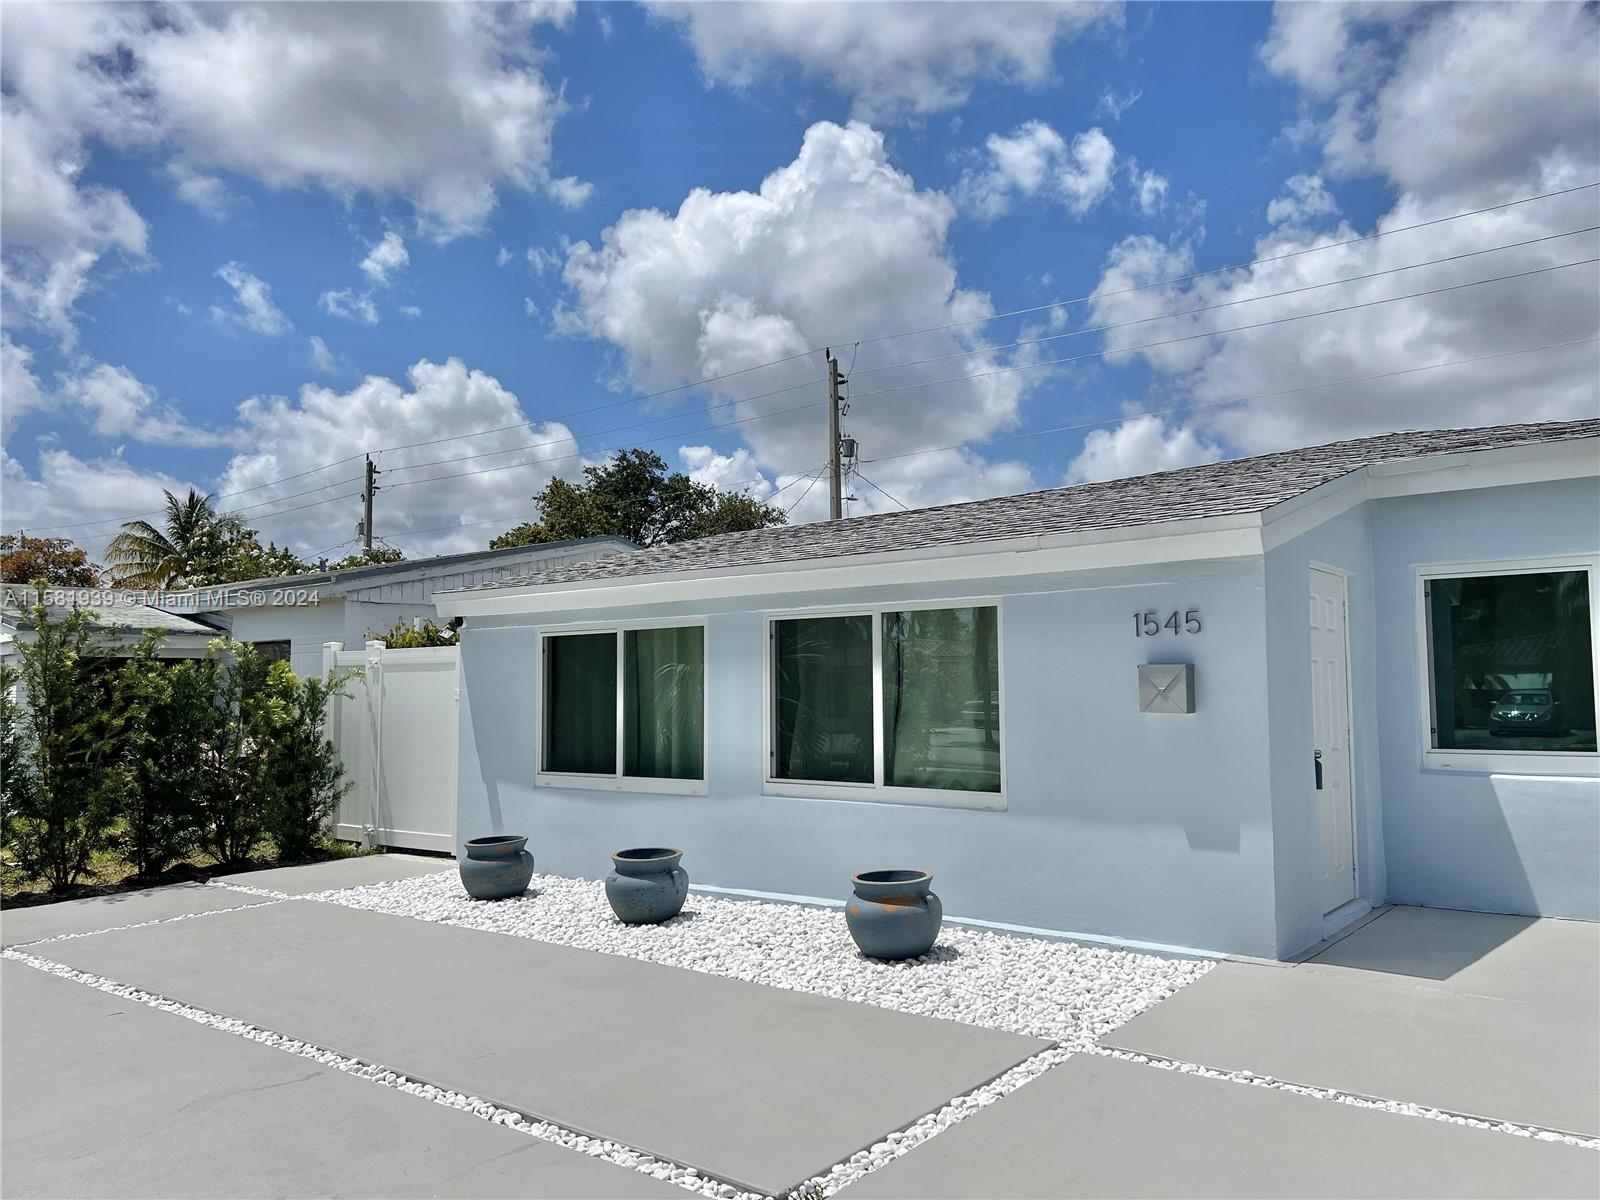 Property for Sale at 1545 Ne 175th St, North Miami Beach, Miami-Dade County, Florida - Bedrooms: 3 
Bathrooms: 1  - $649,995